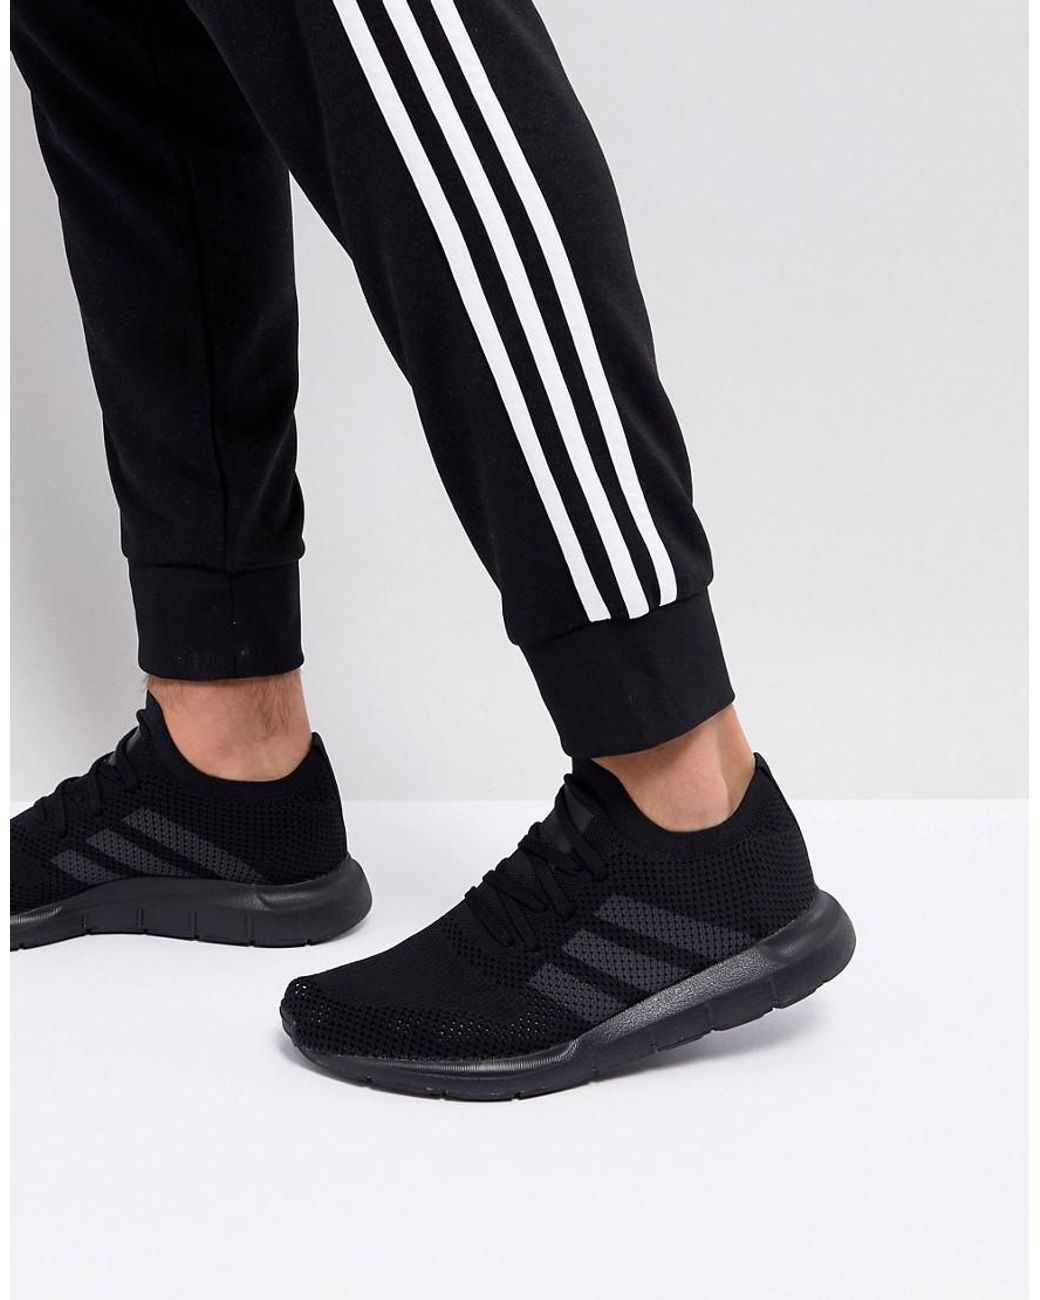 adidas Originals Swift Run Primeknit Sneakers In Black Cq2893 for Men | Lyst